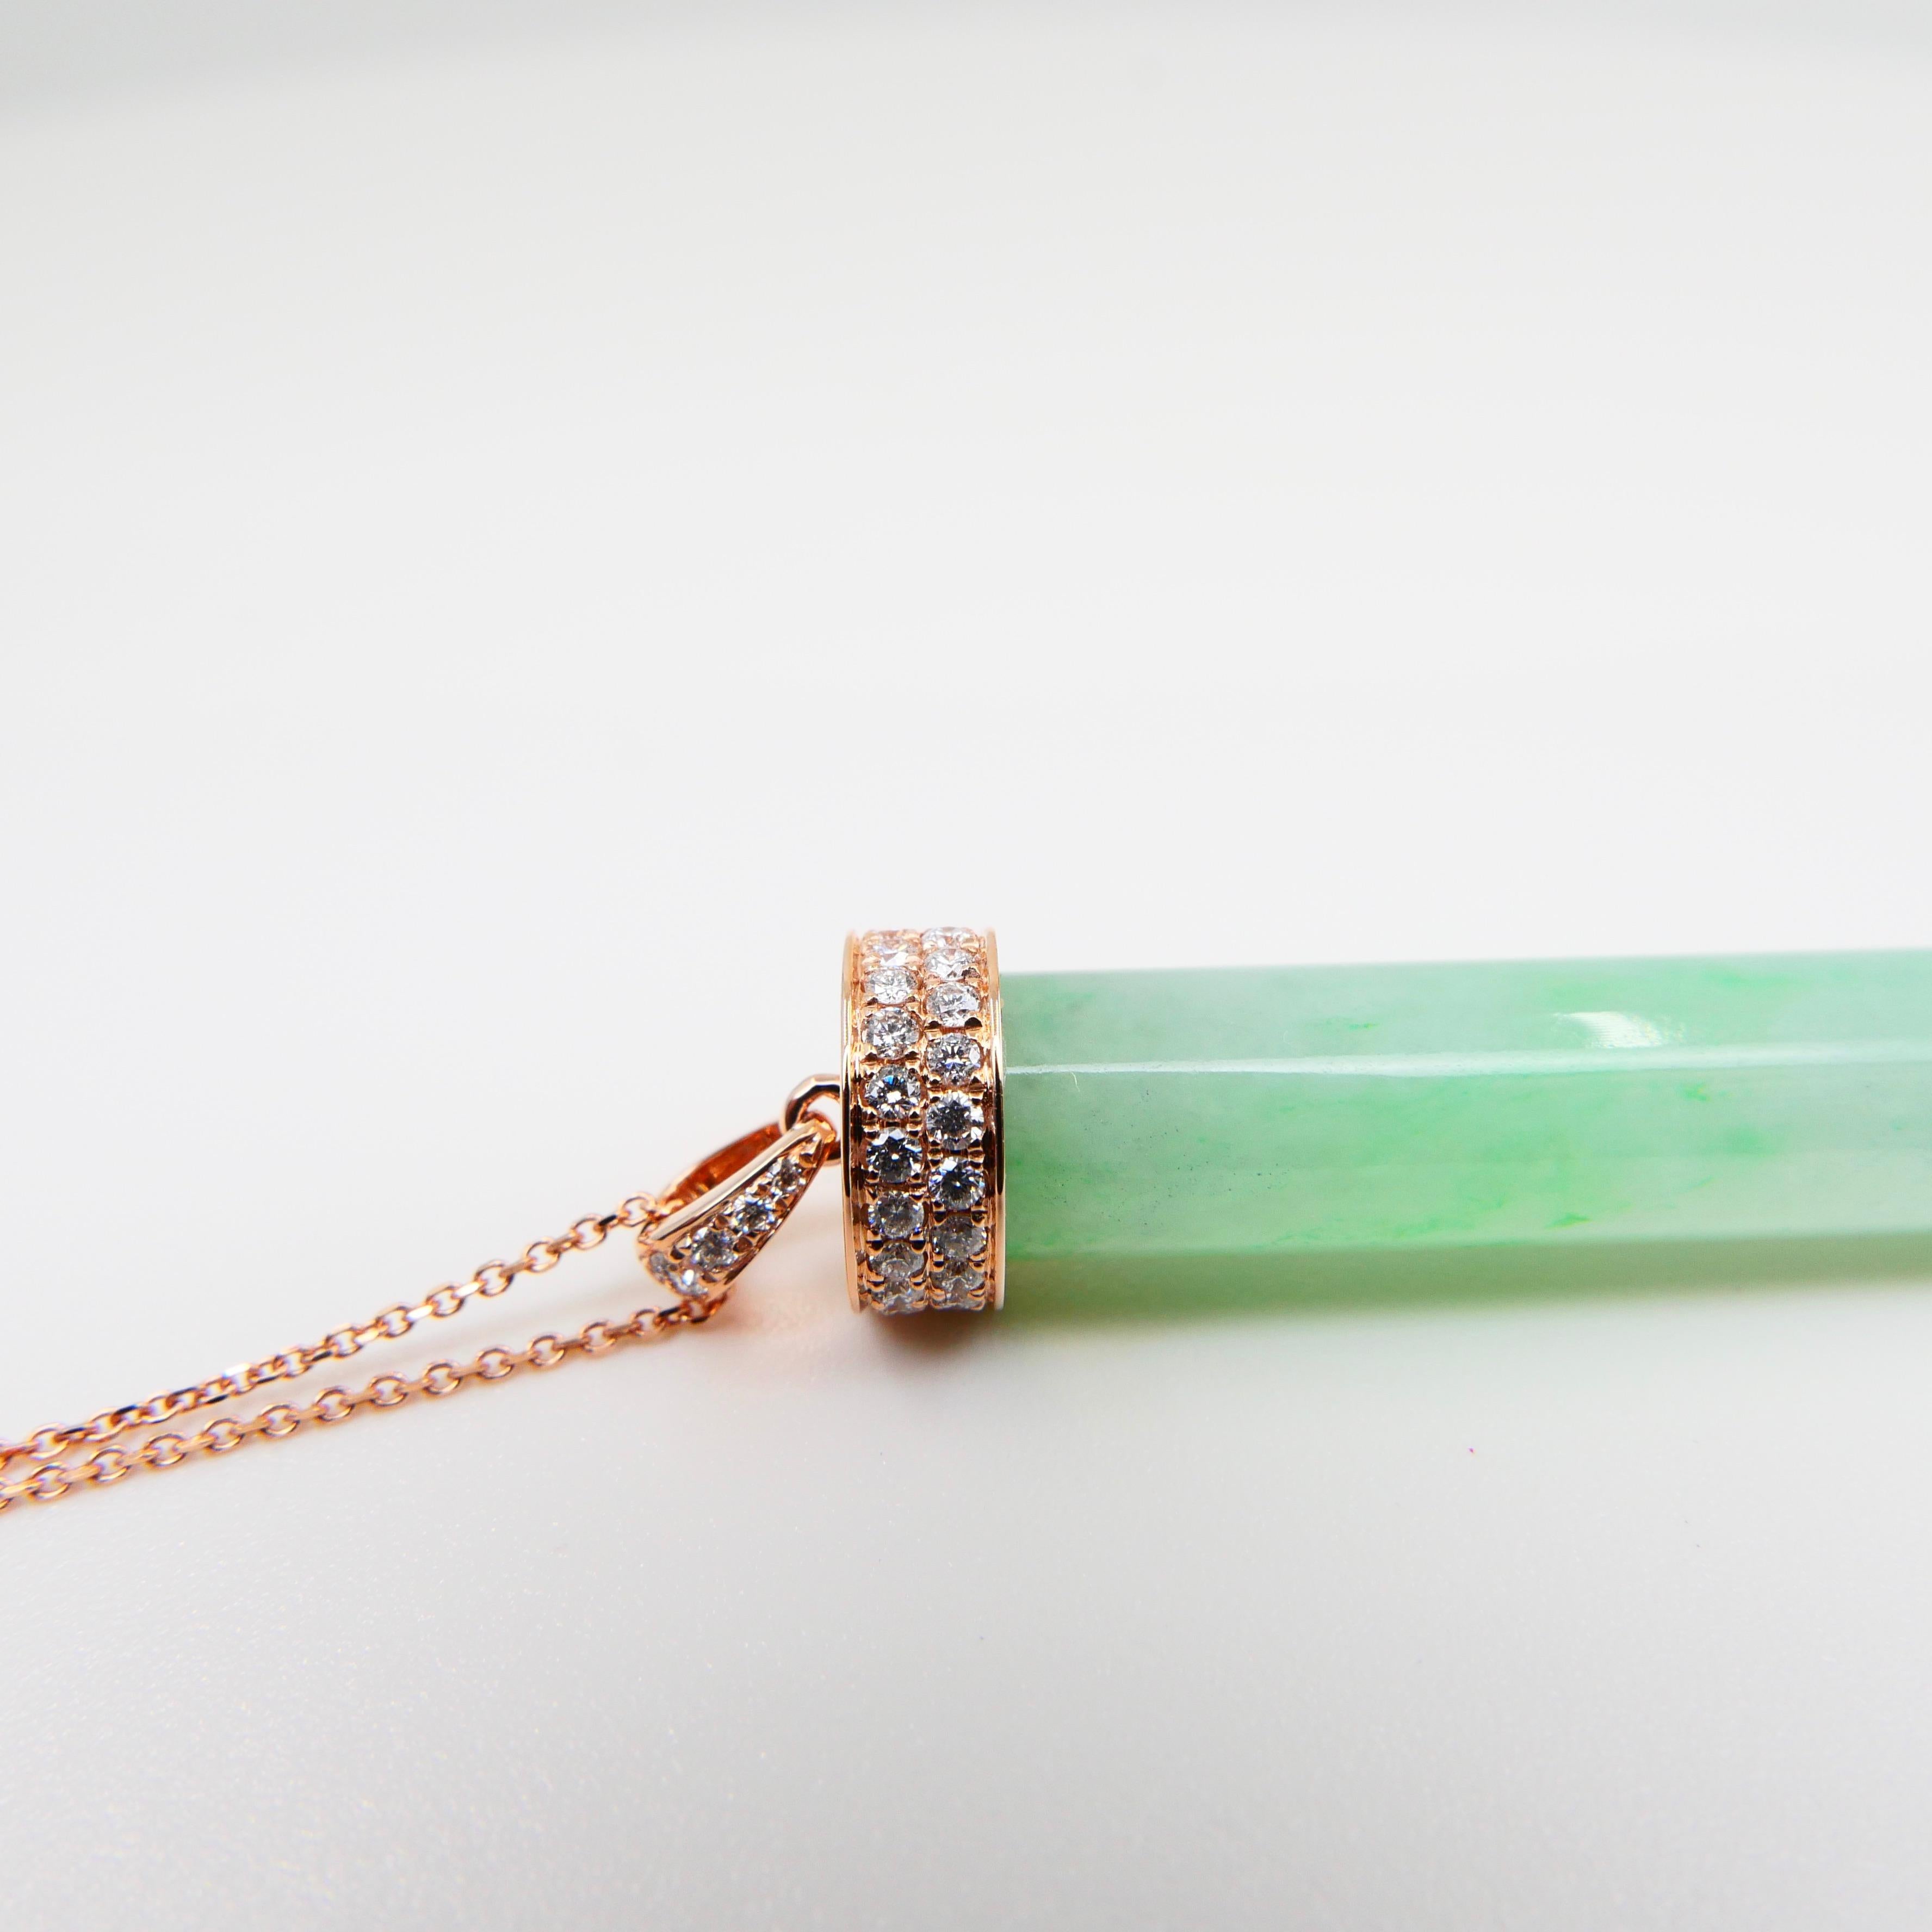 Certified Jadeite Jade and Diamond Pendant Drop Necklace, Icy Mint Green Jade 4